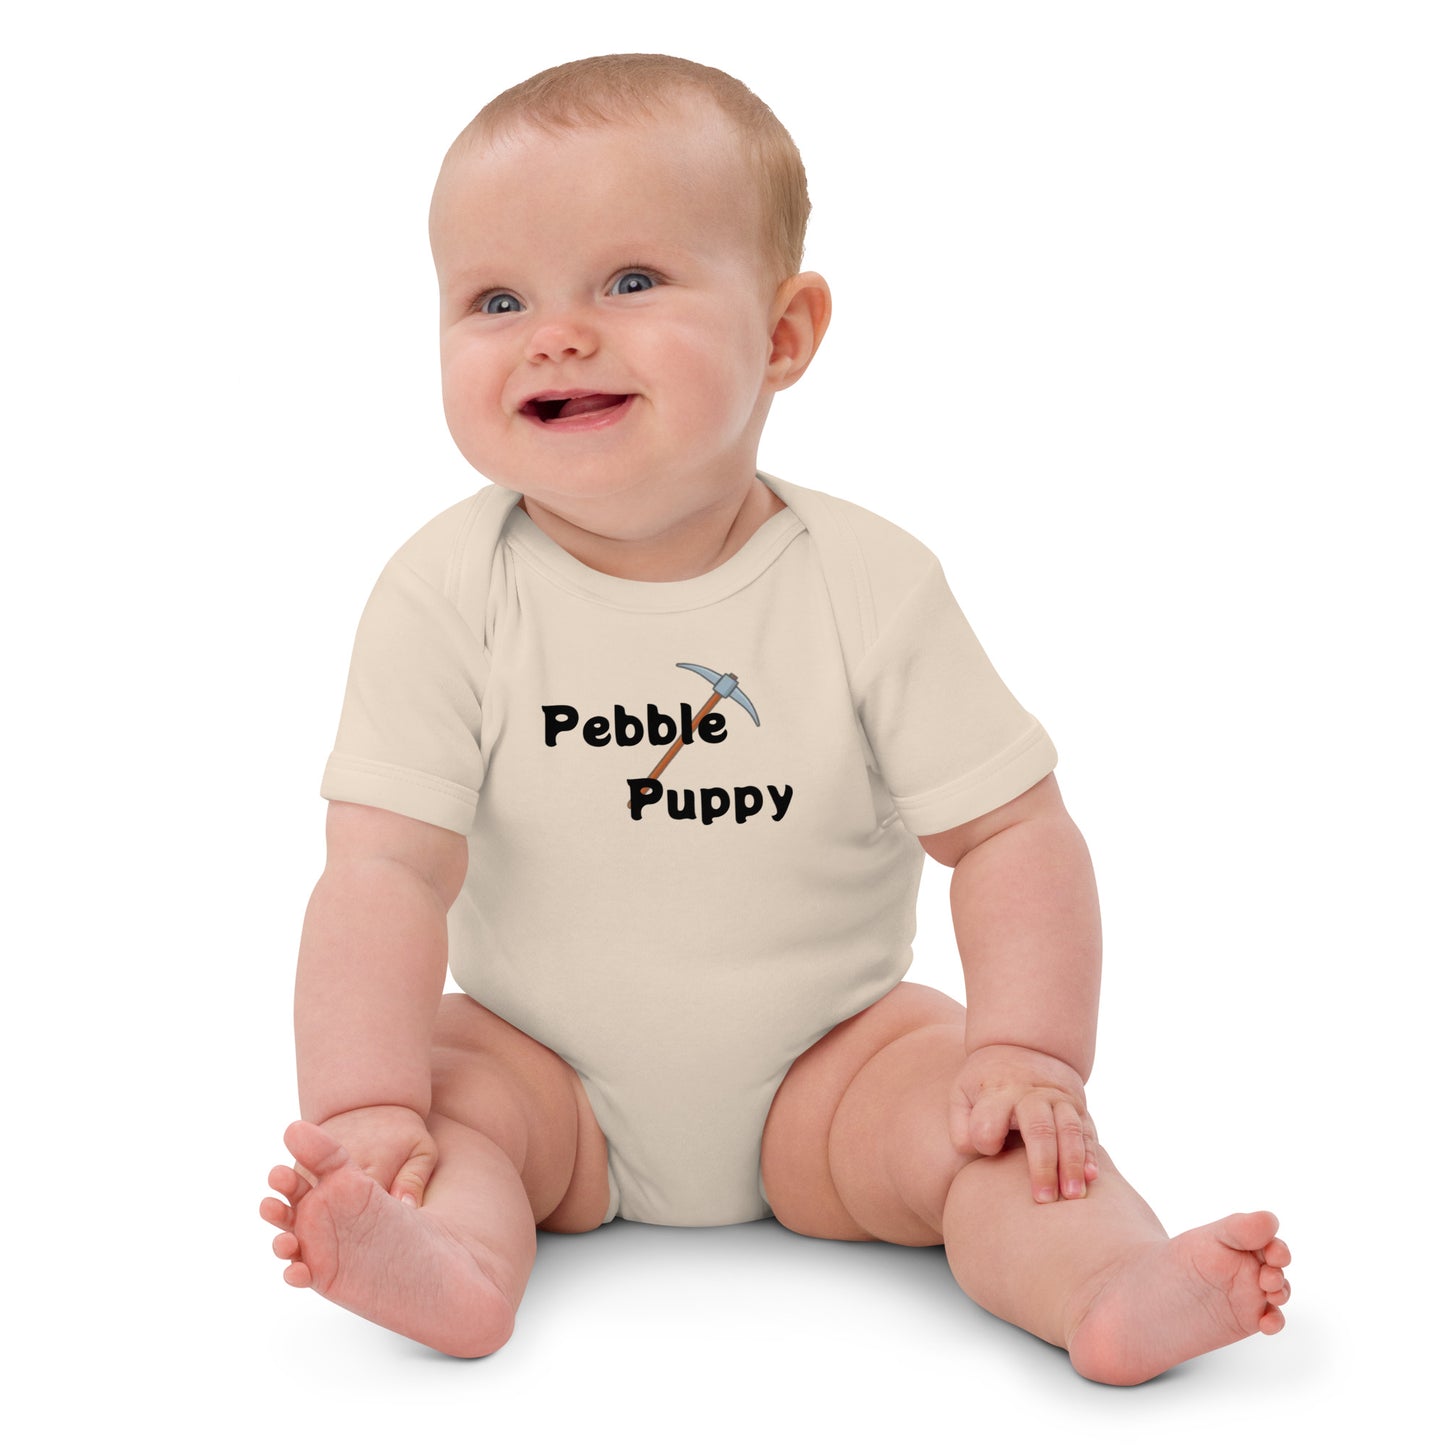 'Pebble Puppy' Organic Cotton Baby Bodysuit